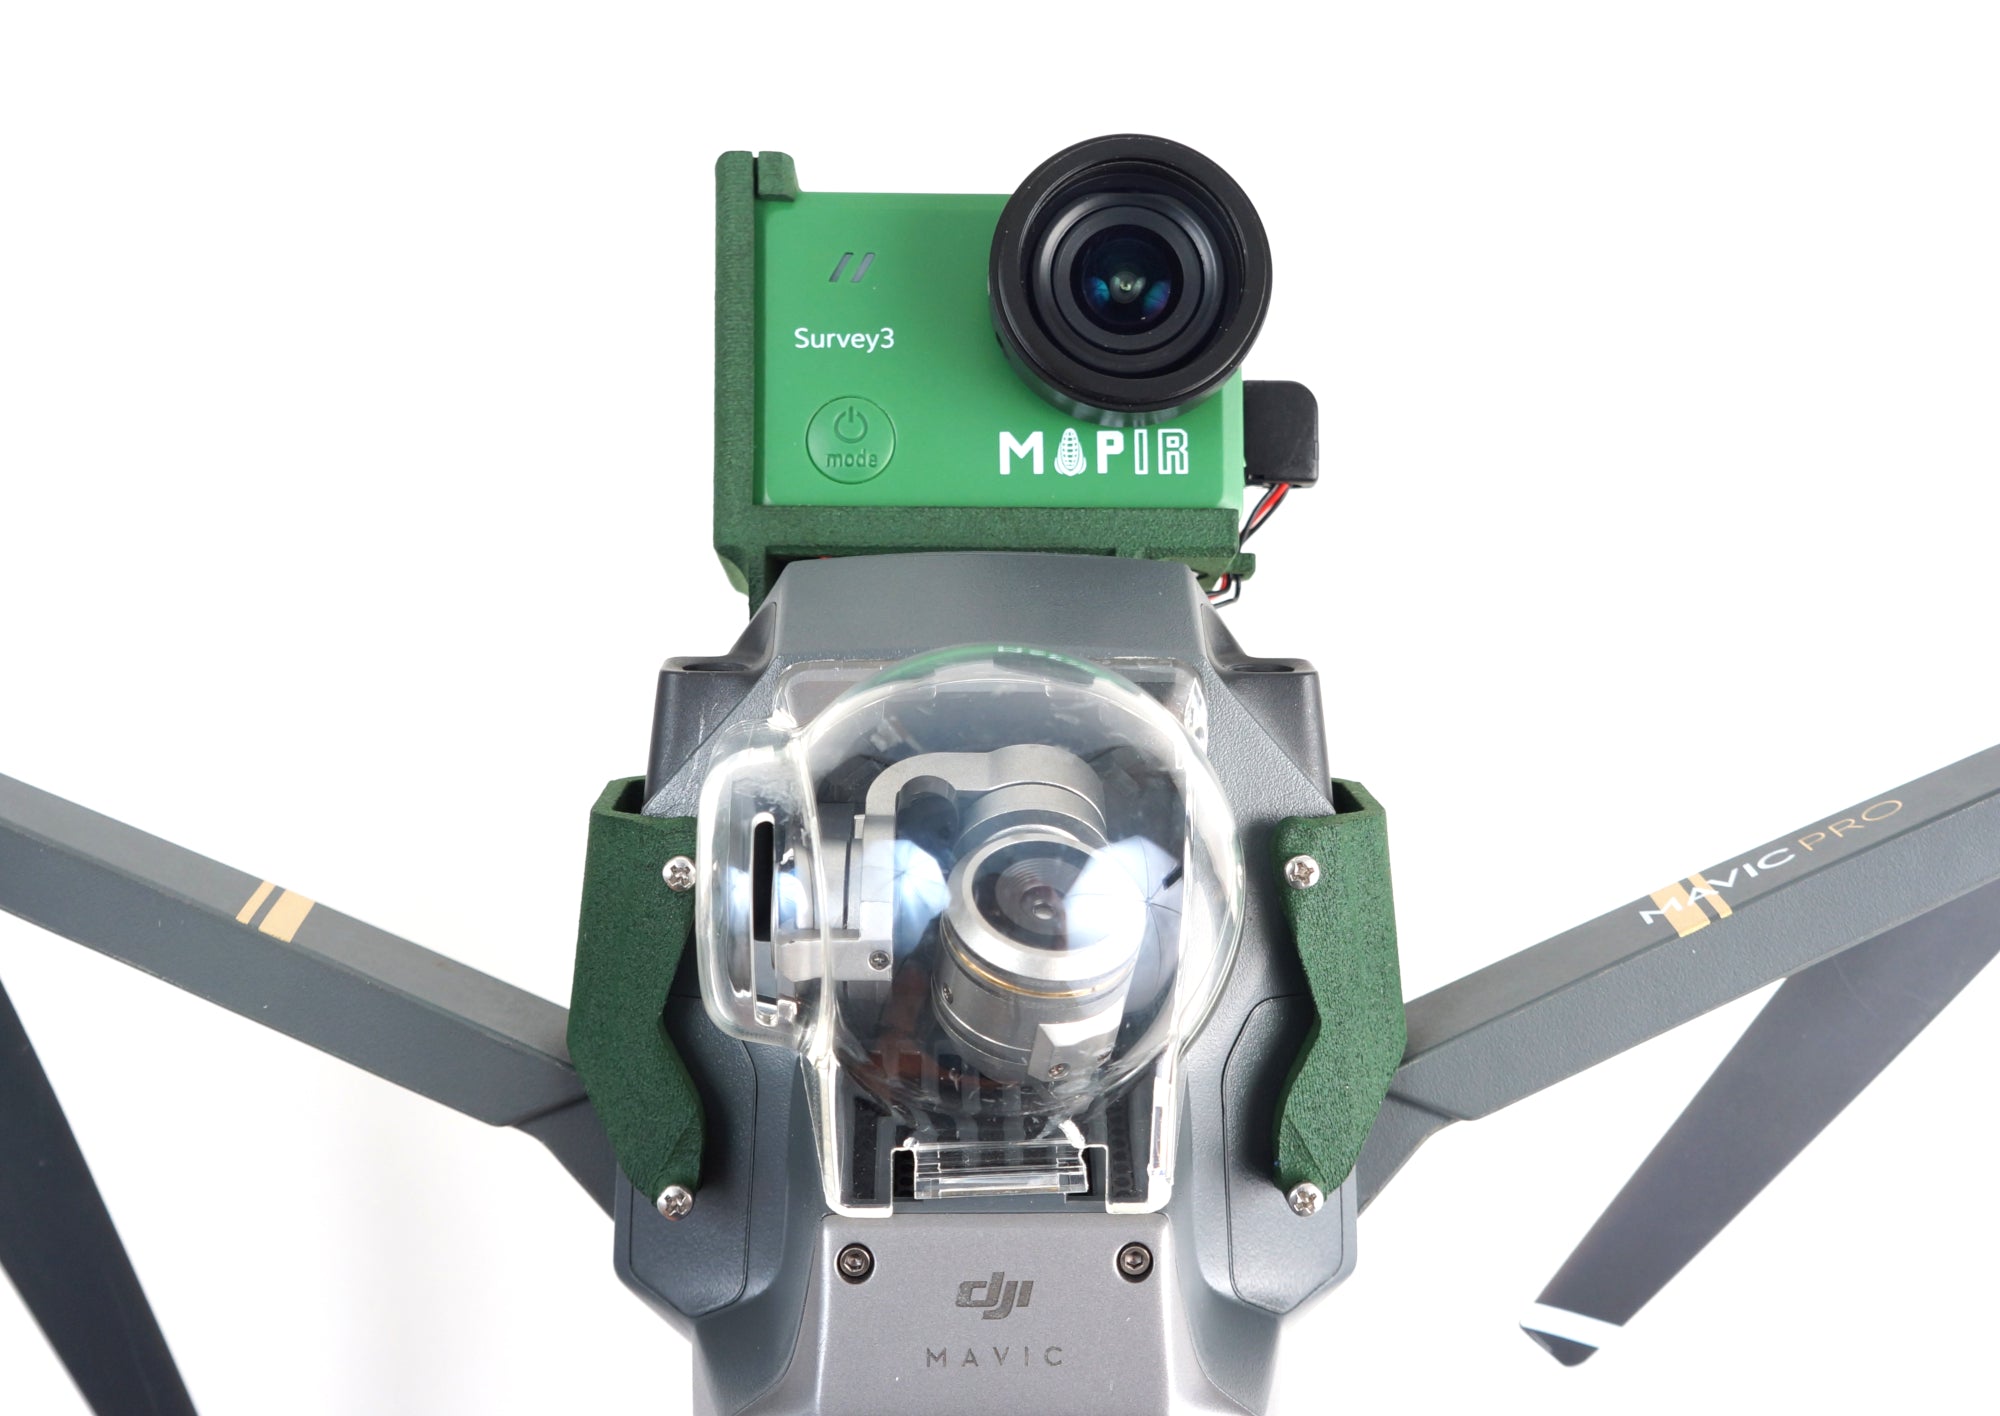 DJI Mavic Pro MAPIR Survey3 Single Camera Mount - MAPIR CAMERA